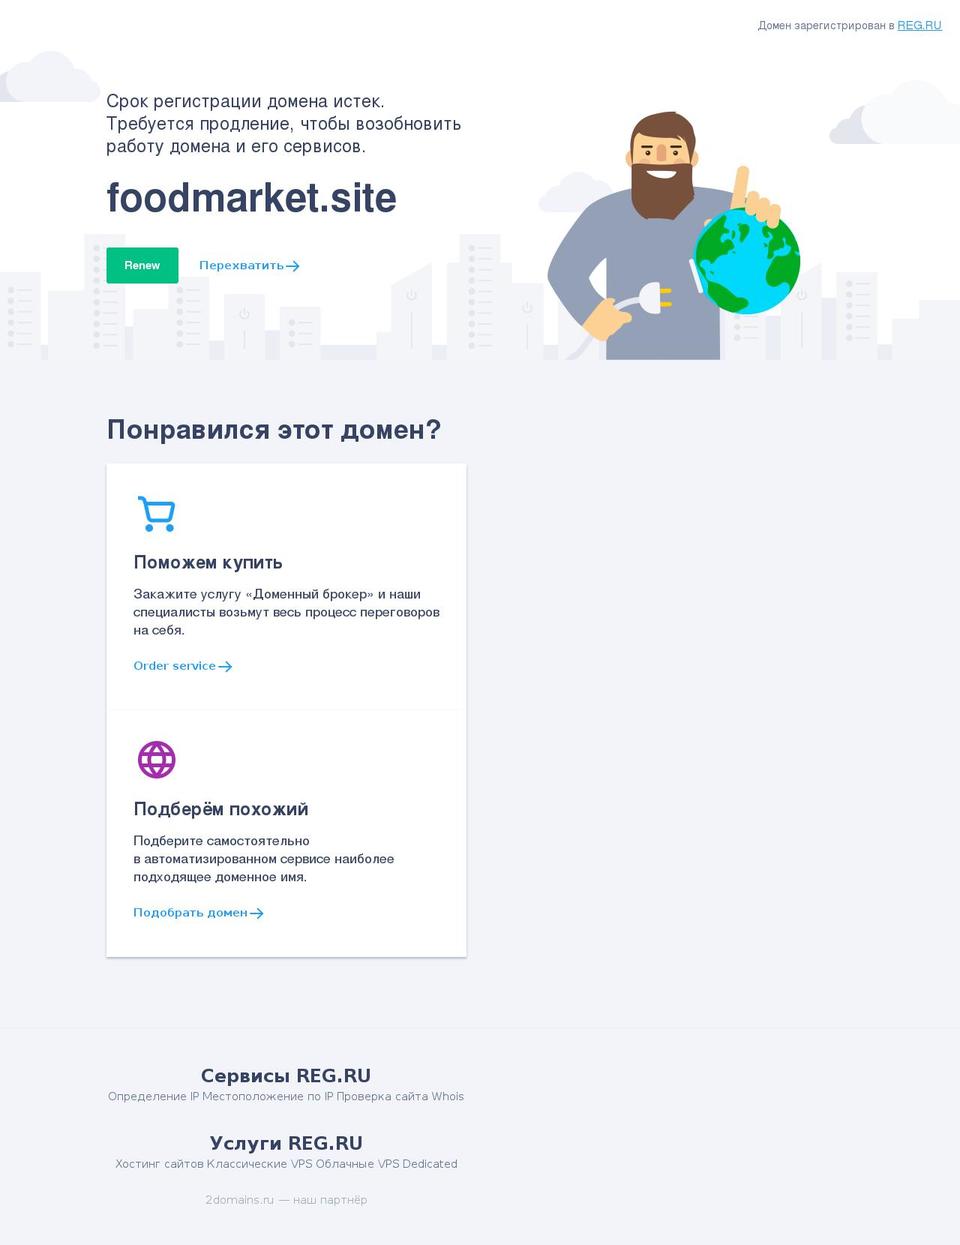 foodmarket.site shopify website screenshot